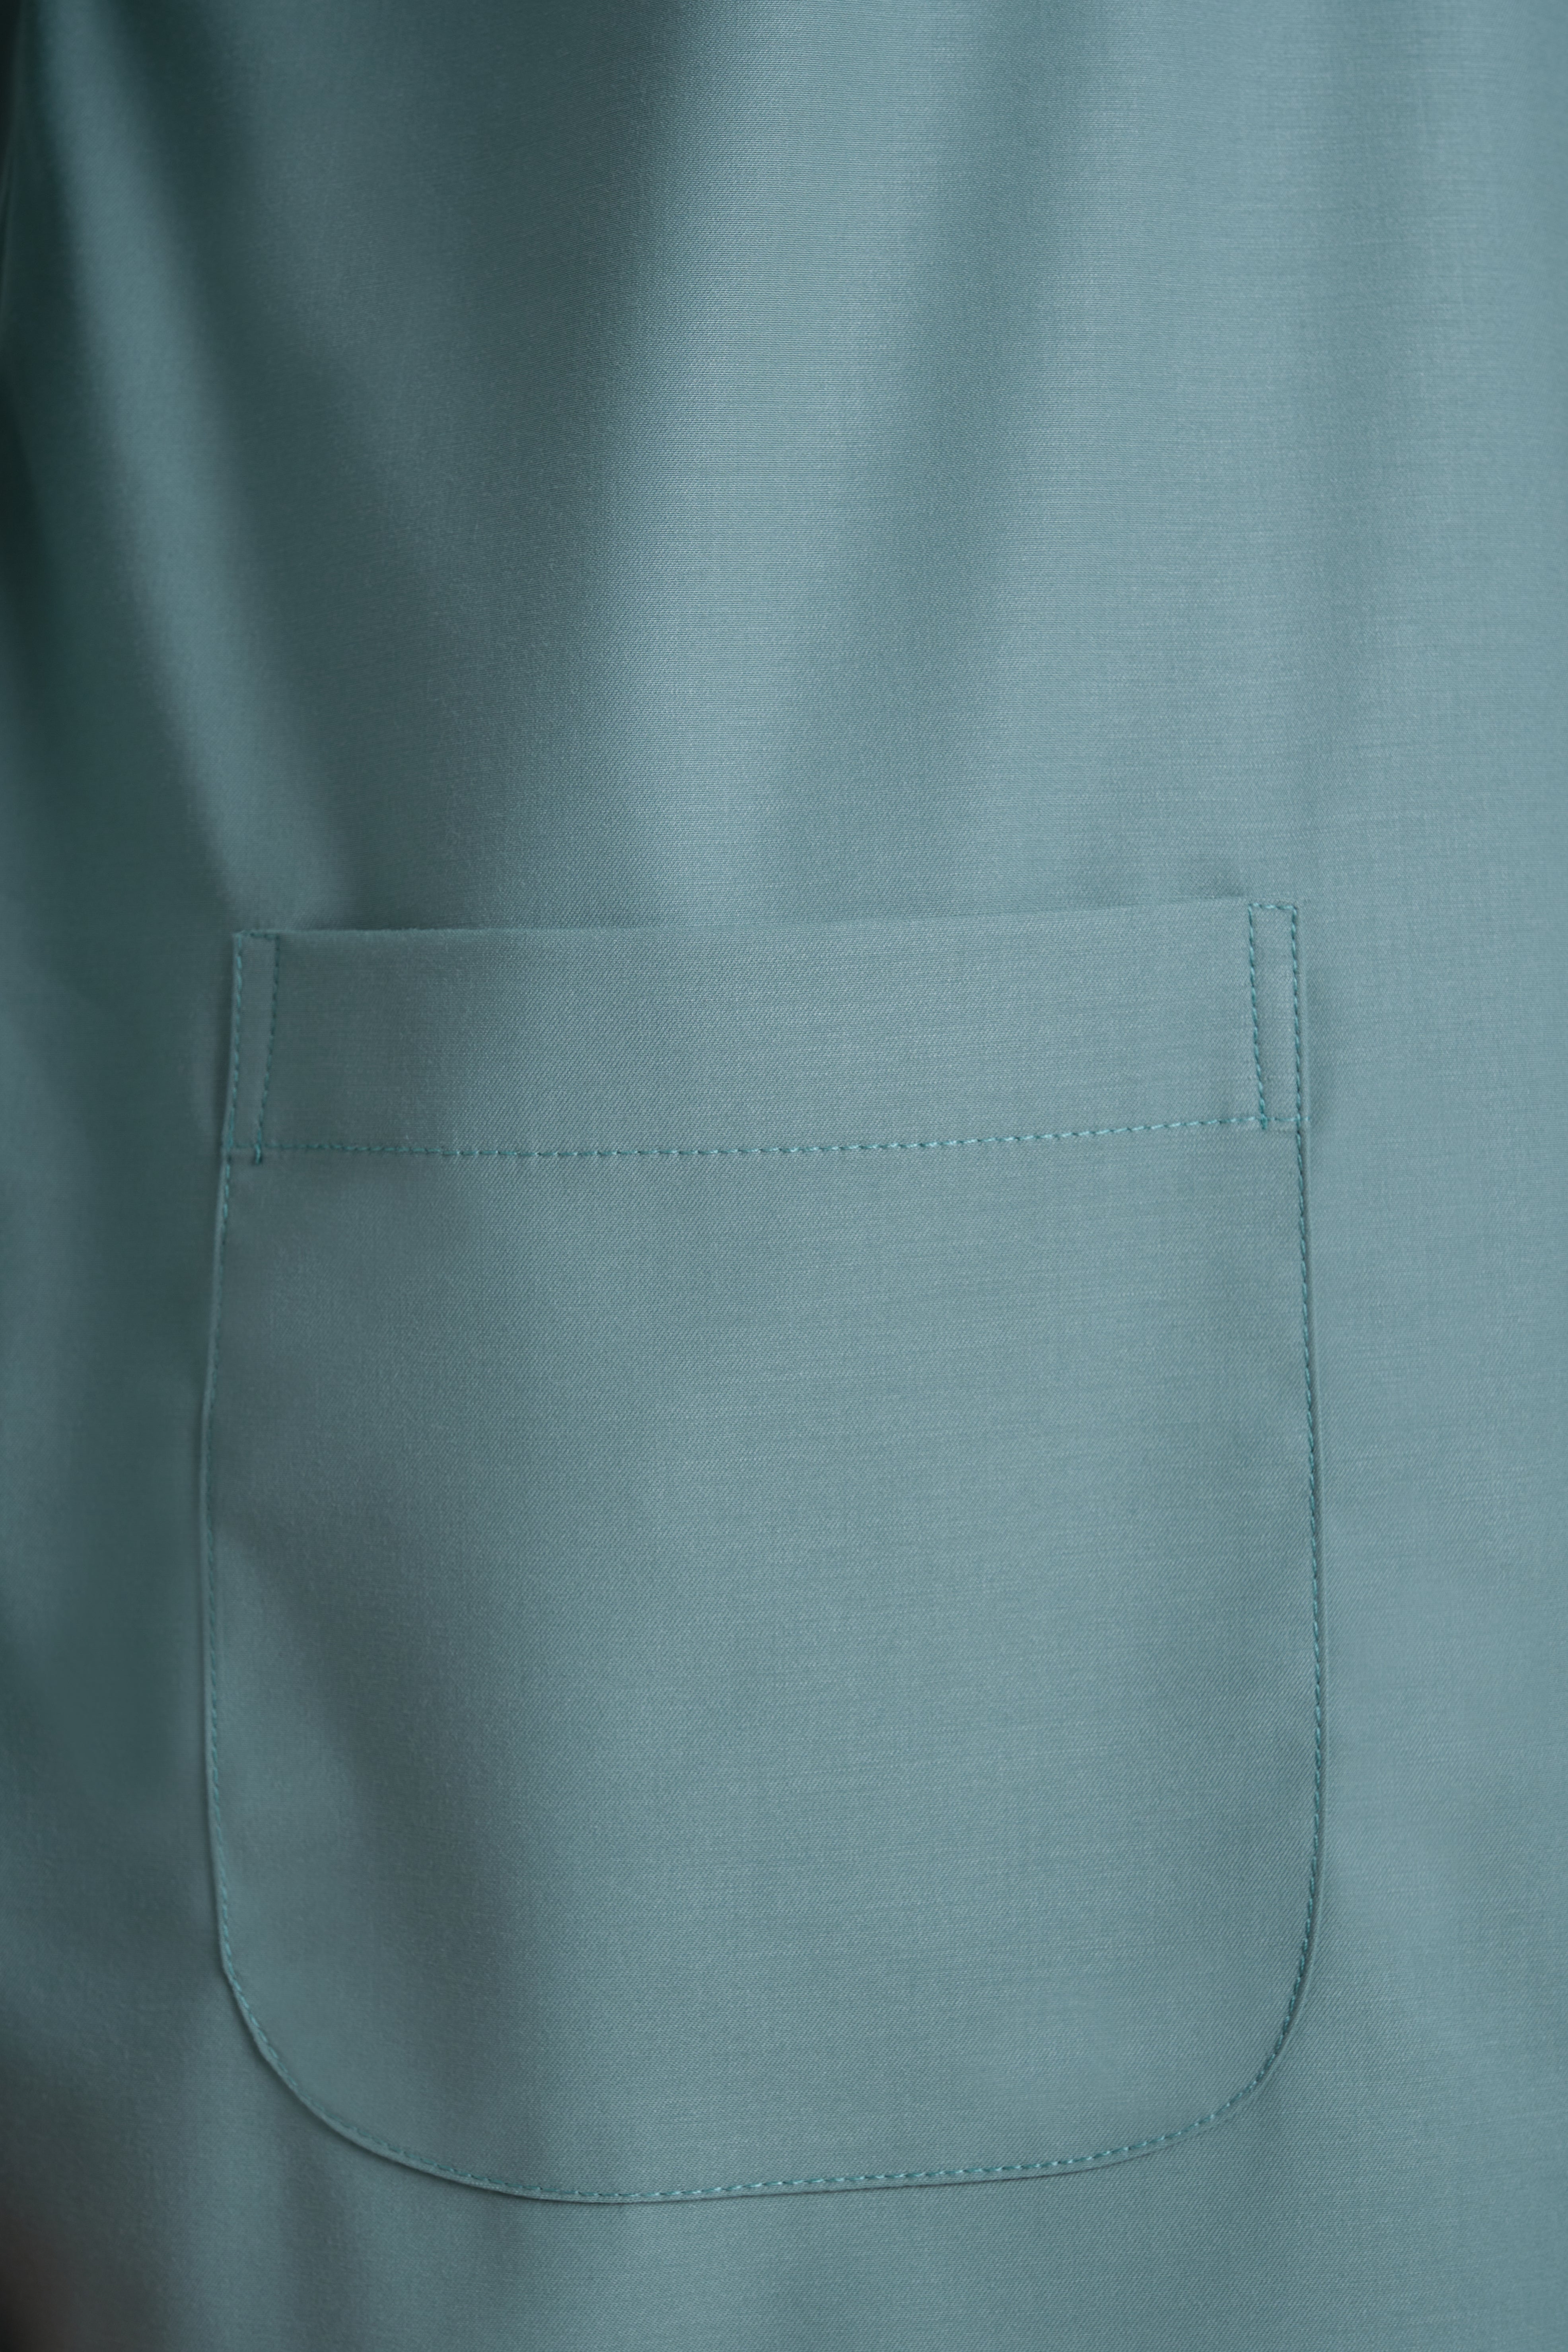 Patawali Modern Fit Baju Melayu Teluk Belanga - Soft Teal Green